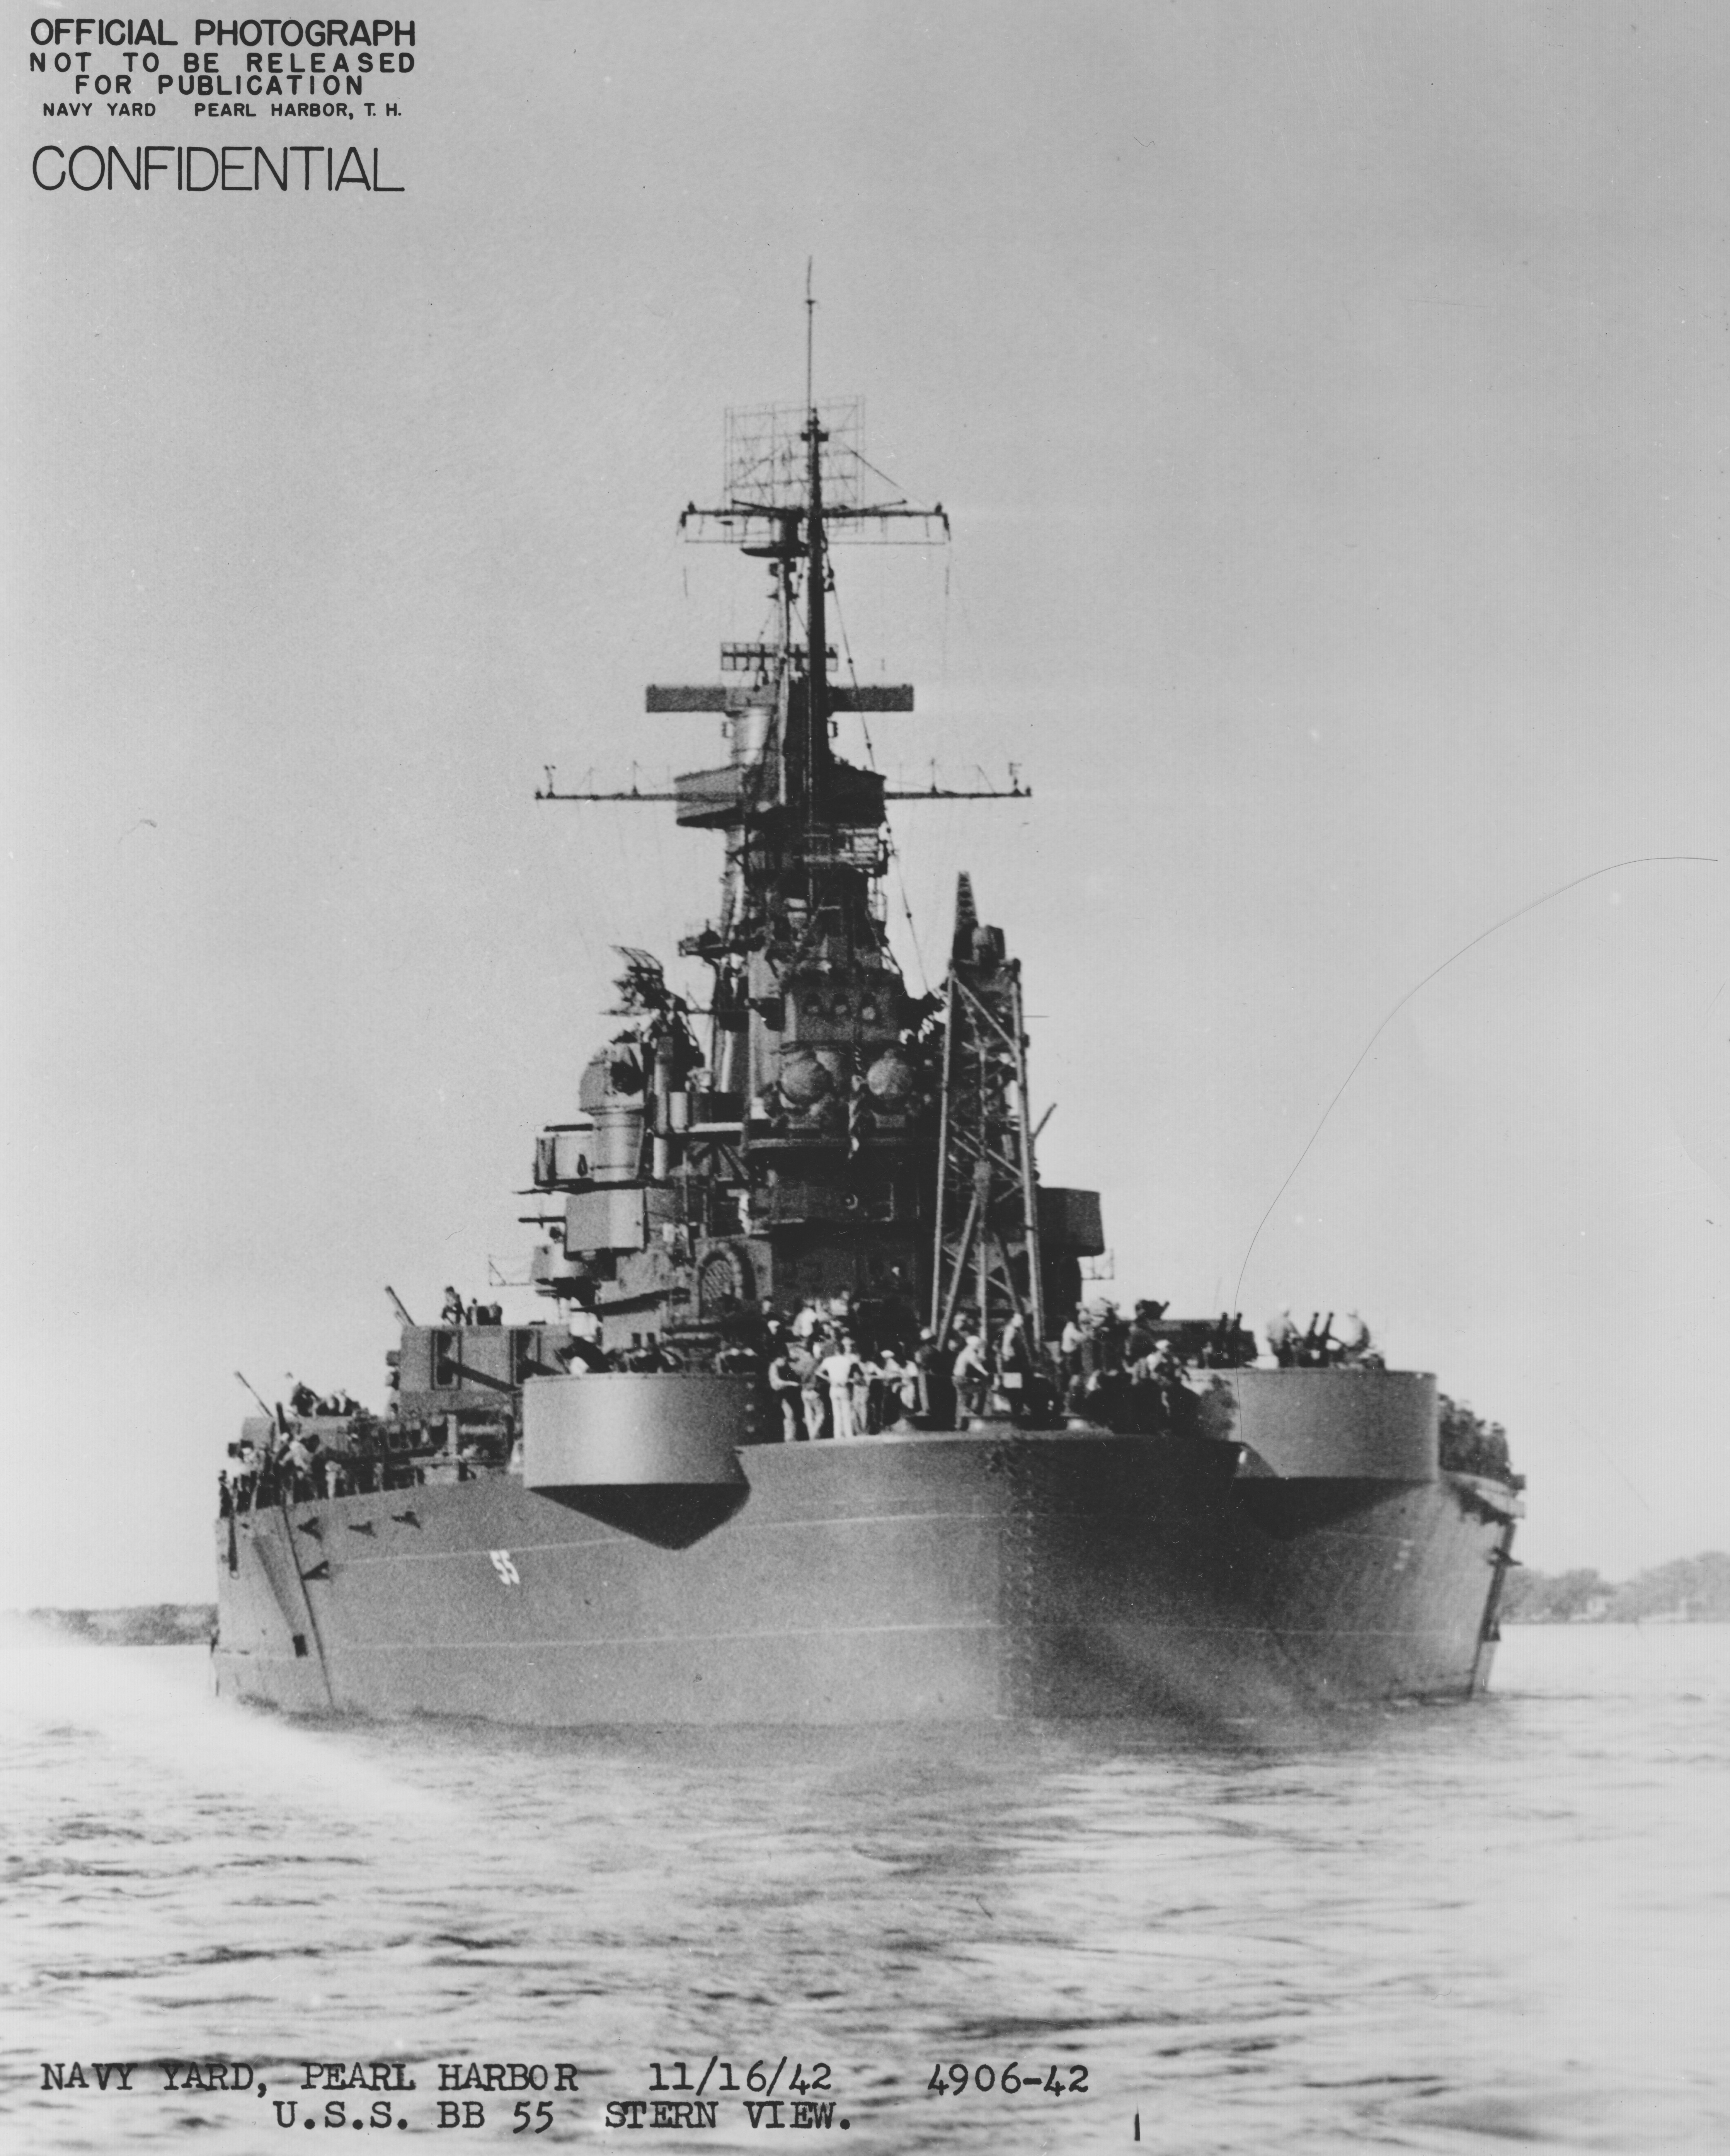 View of the stern of USS North Carolina, Pearl Harbor, US Territory of Hawaii, 16 Nov 1942